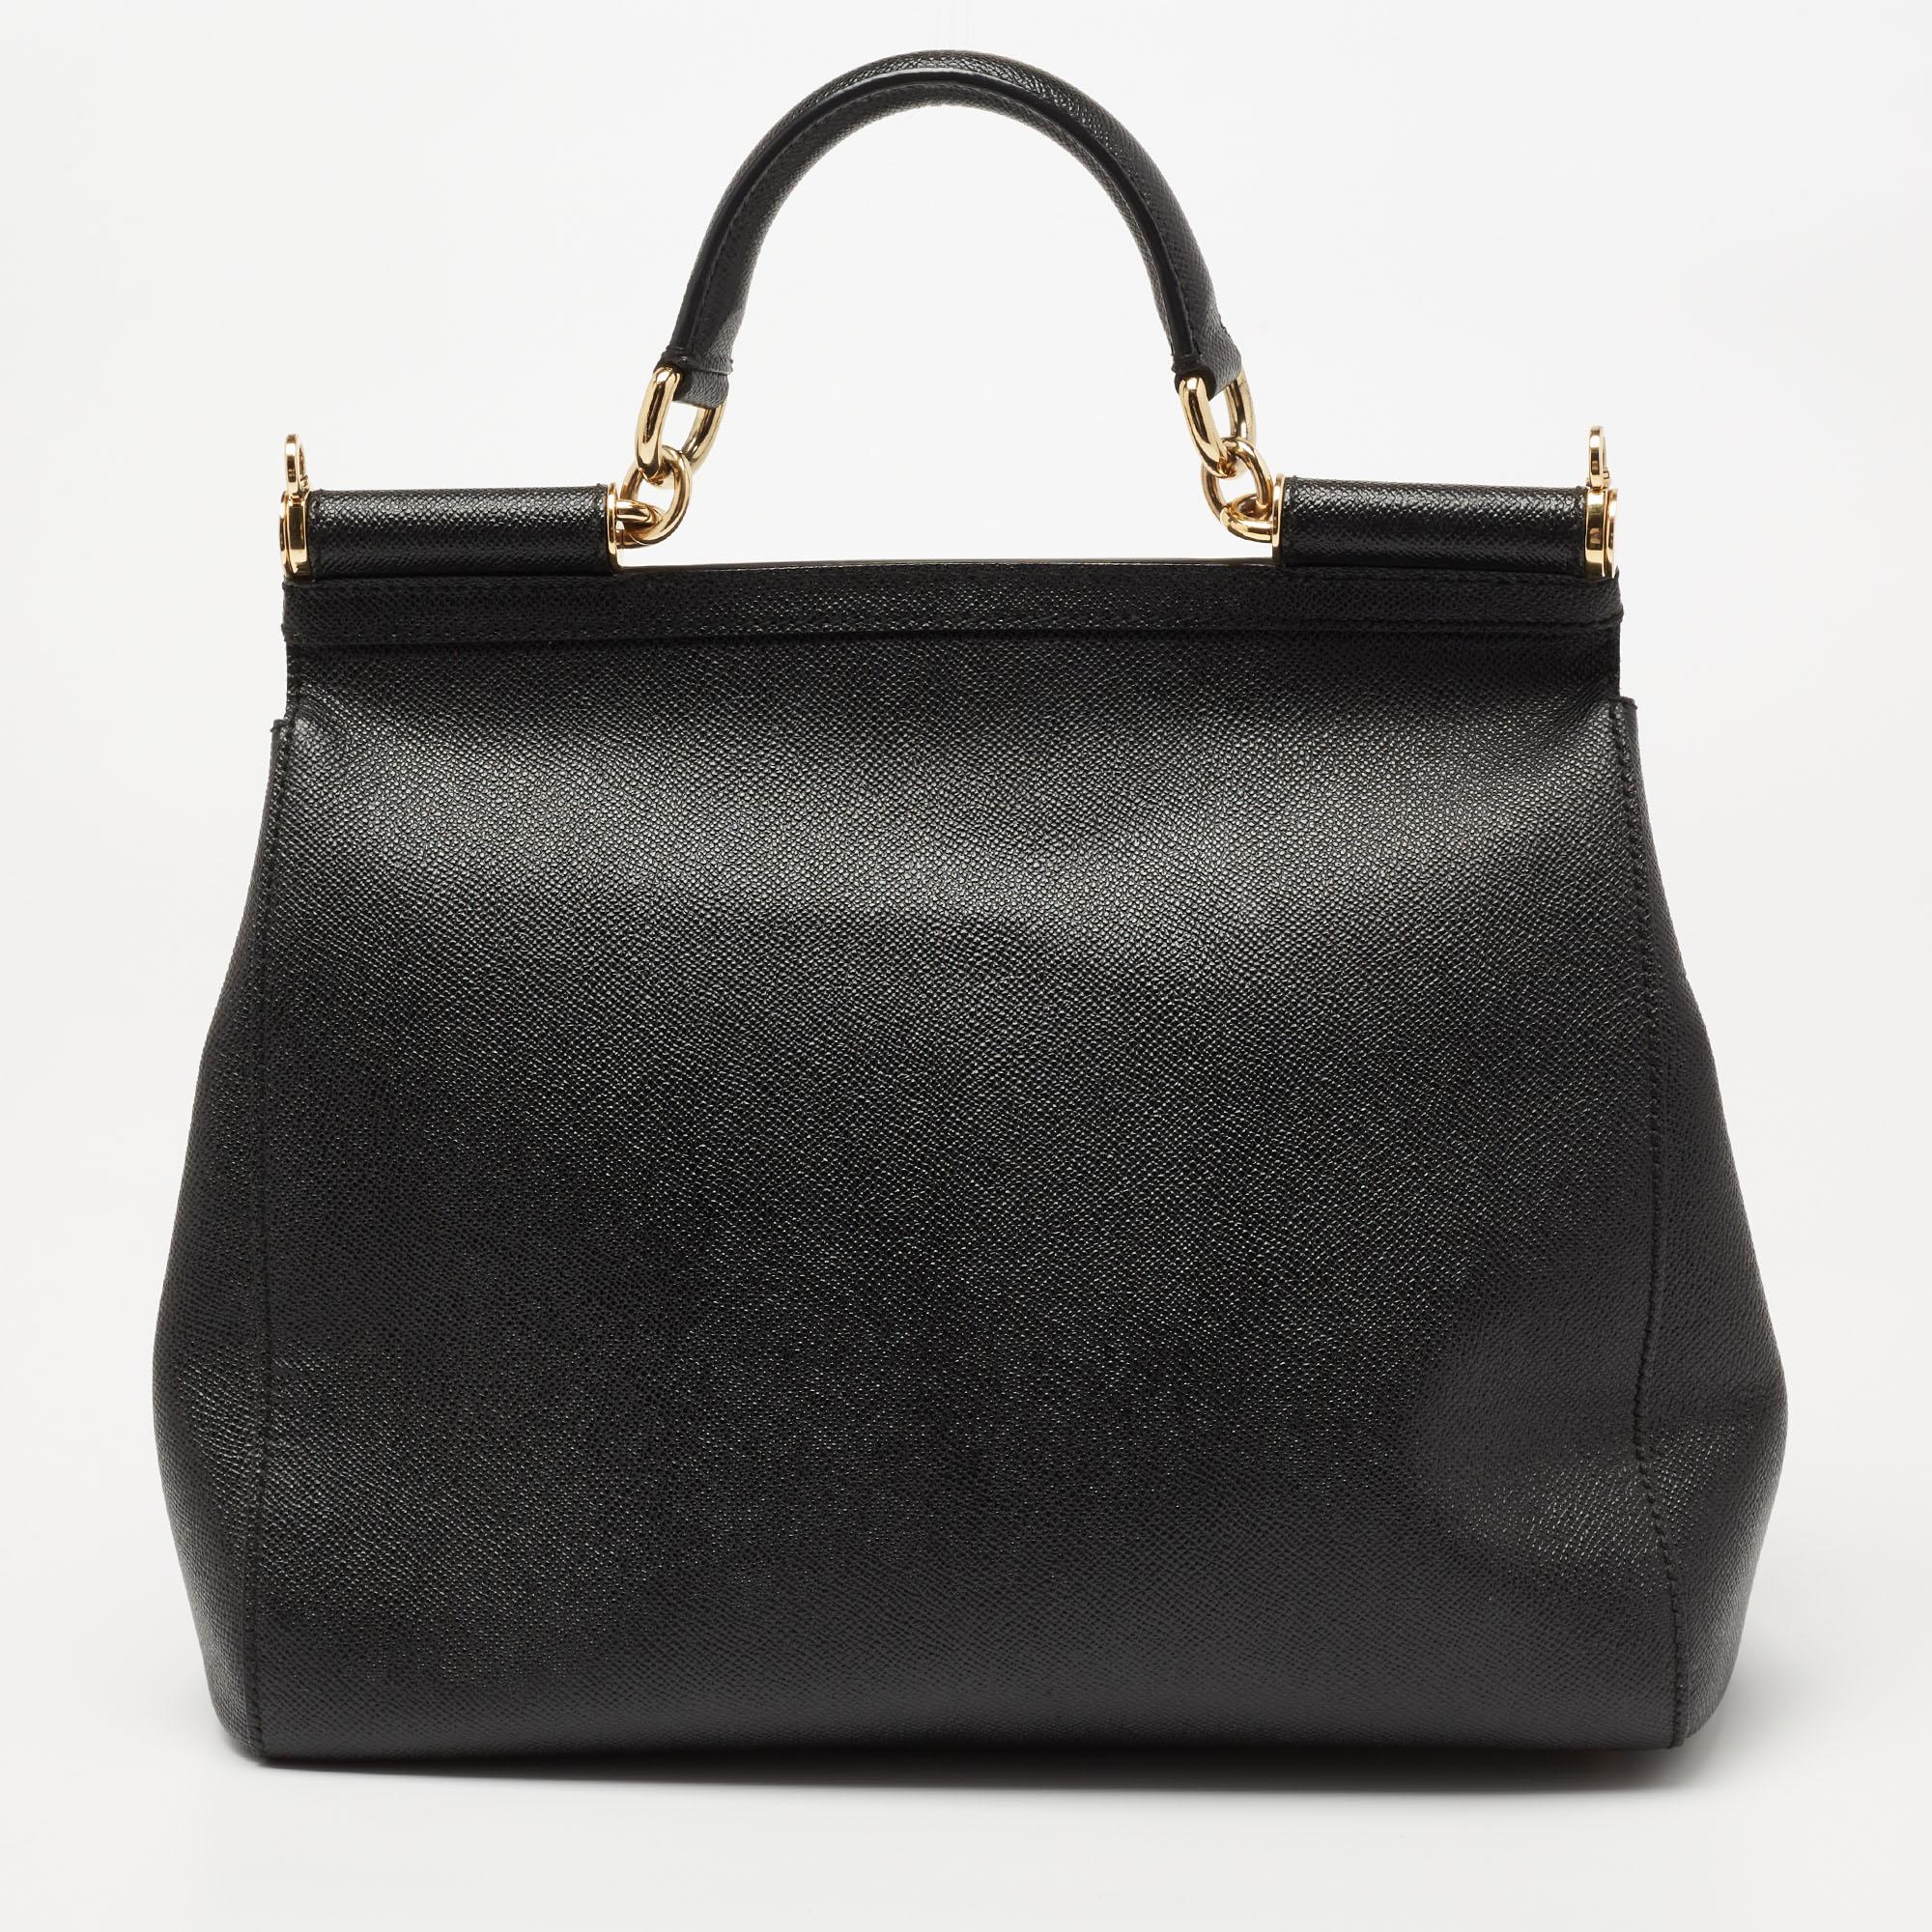 Dolce & Gabbana Black Leather Miss Sicily Top Handle Bag 1